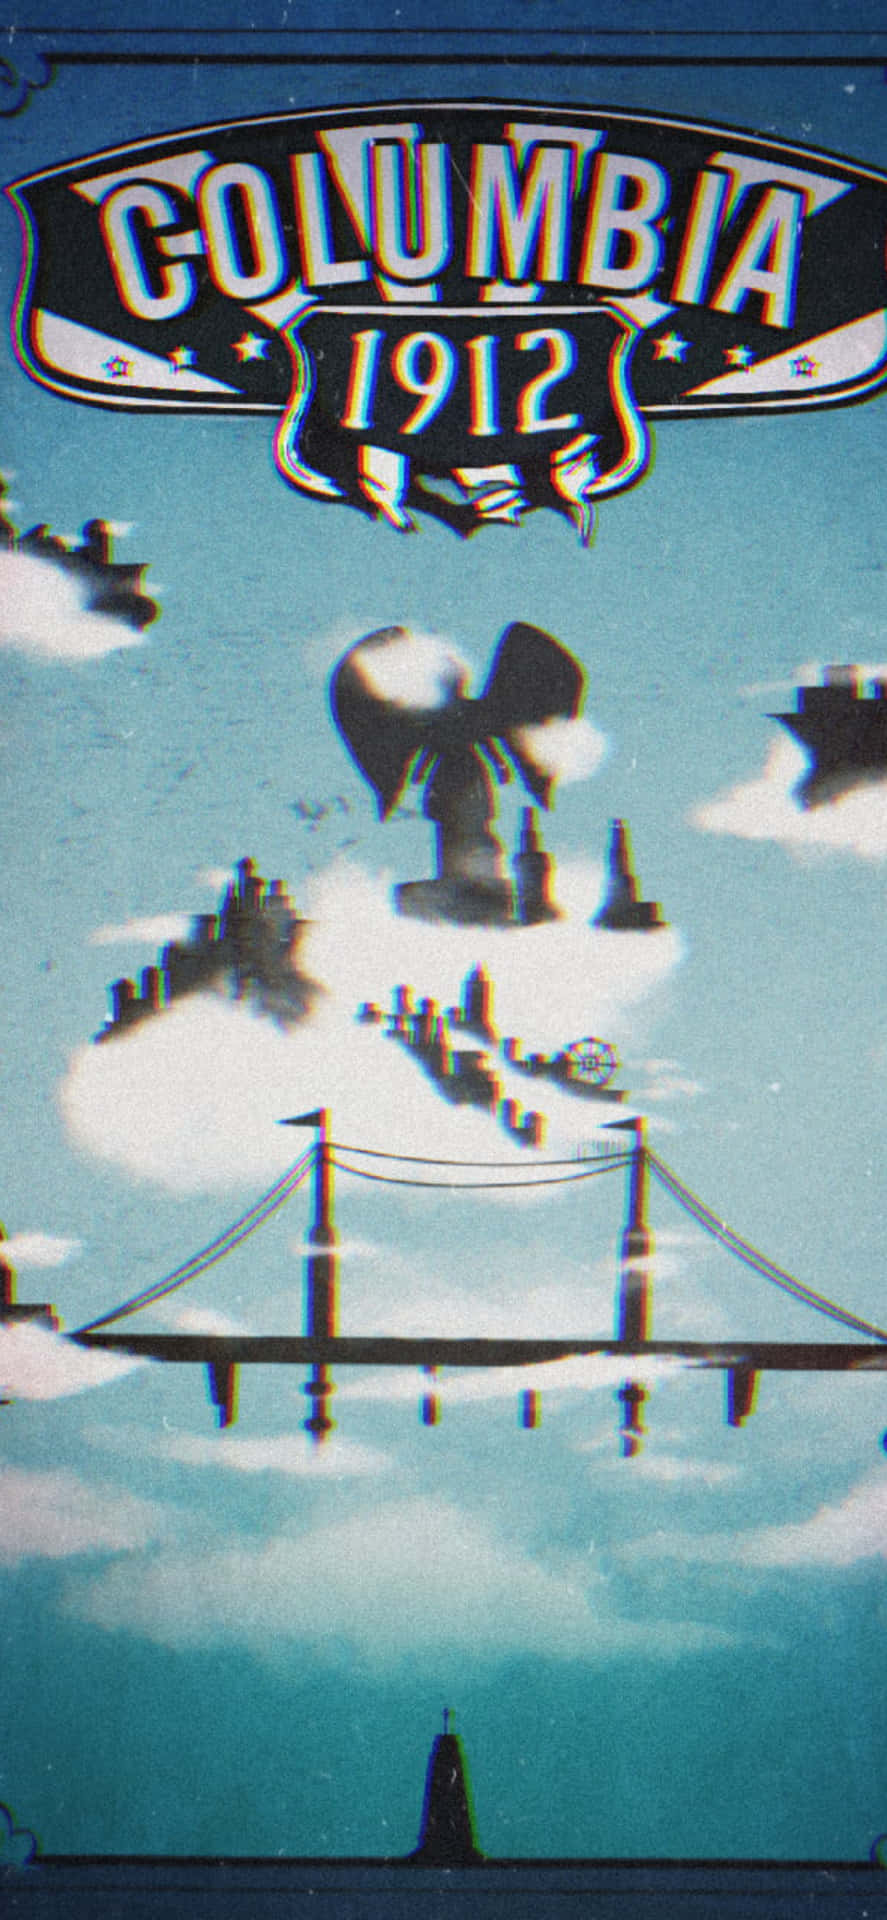 Iphonex Hintergrundbild Bioshock Infinite Columbia 1912